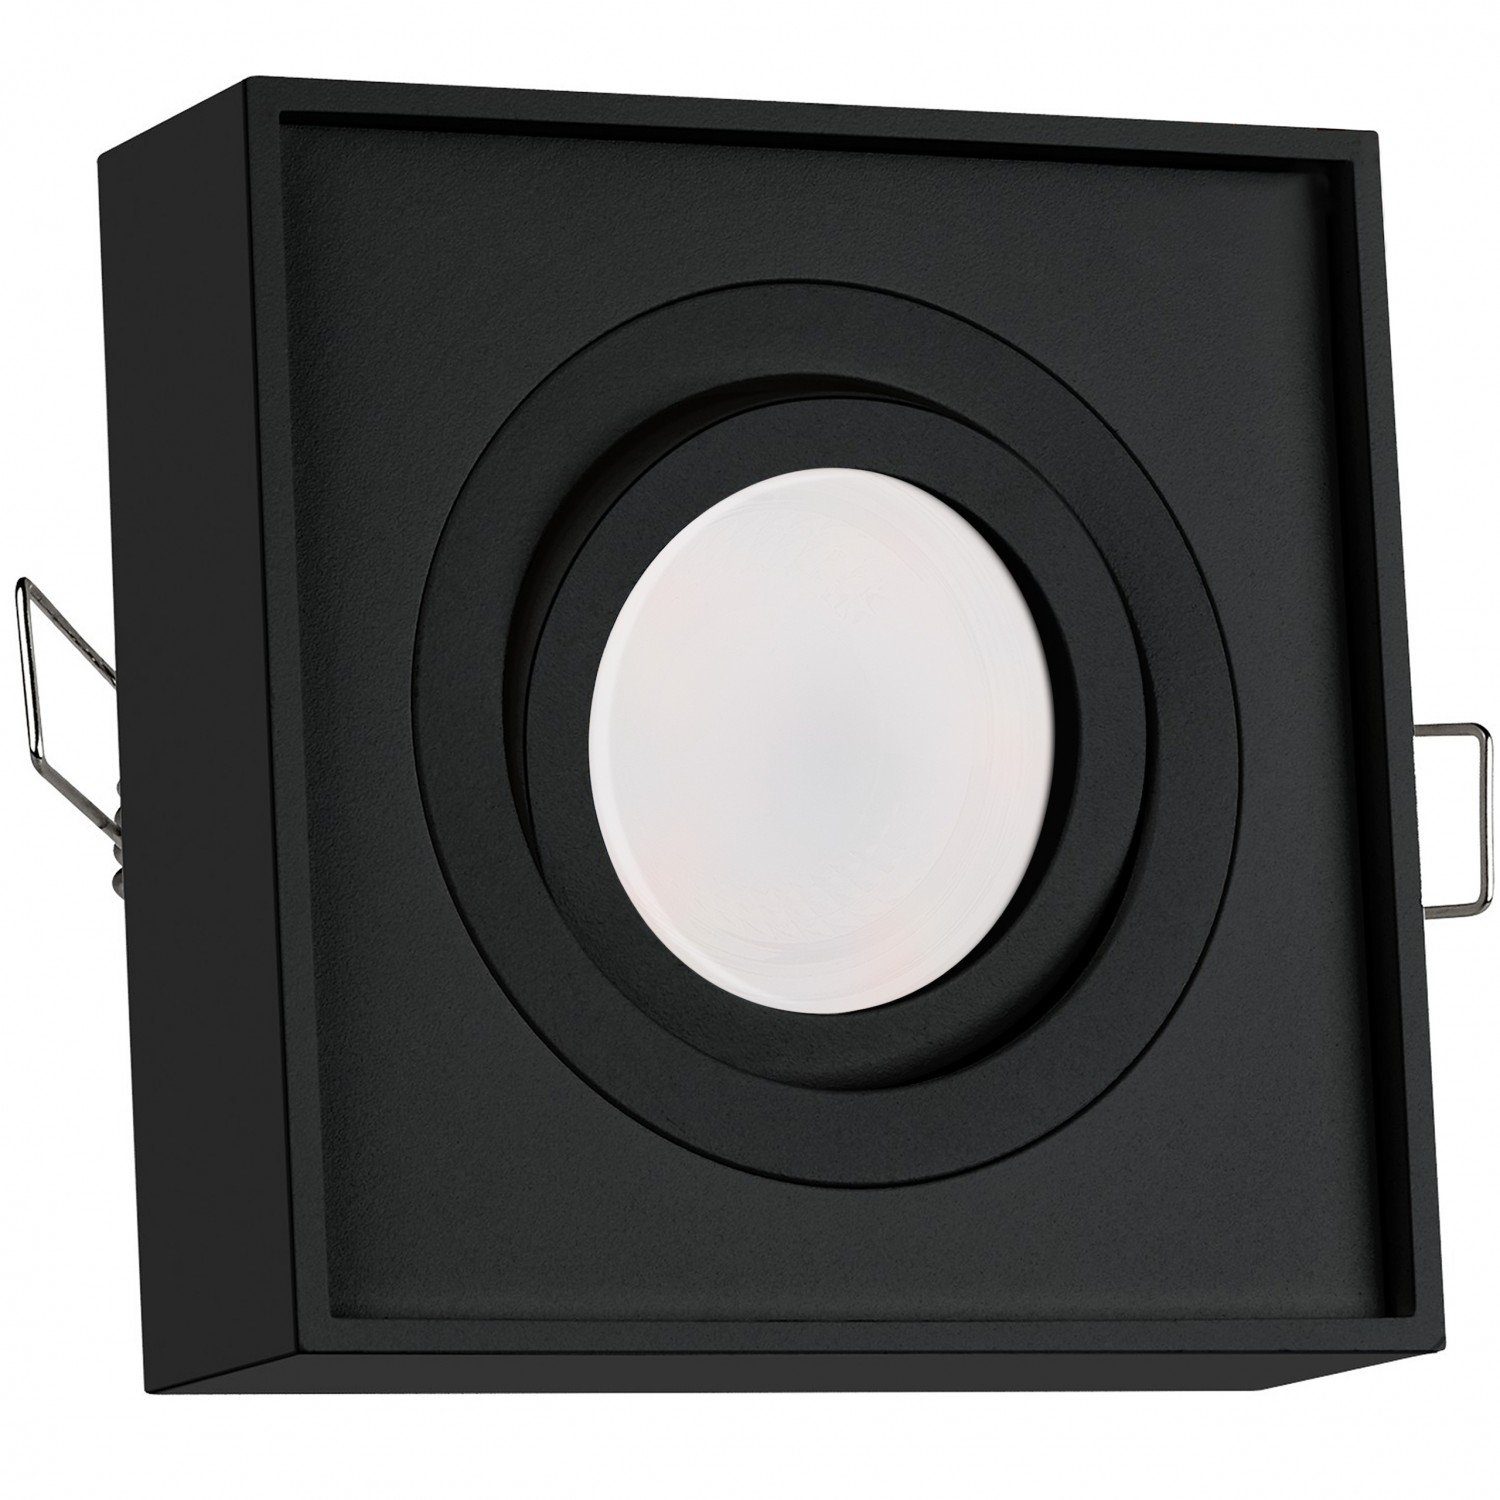 LEDANDO LED Einbaustrahler LED mit in von Leuchtmittel schwarz Einbaustrahler flach extra Set 5W